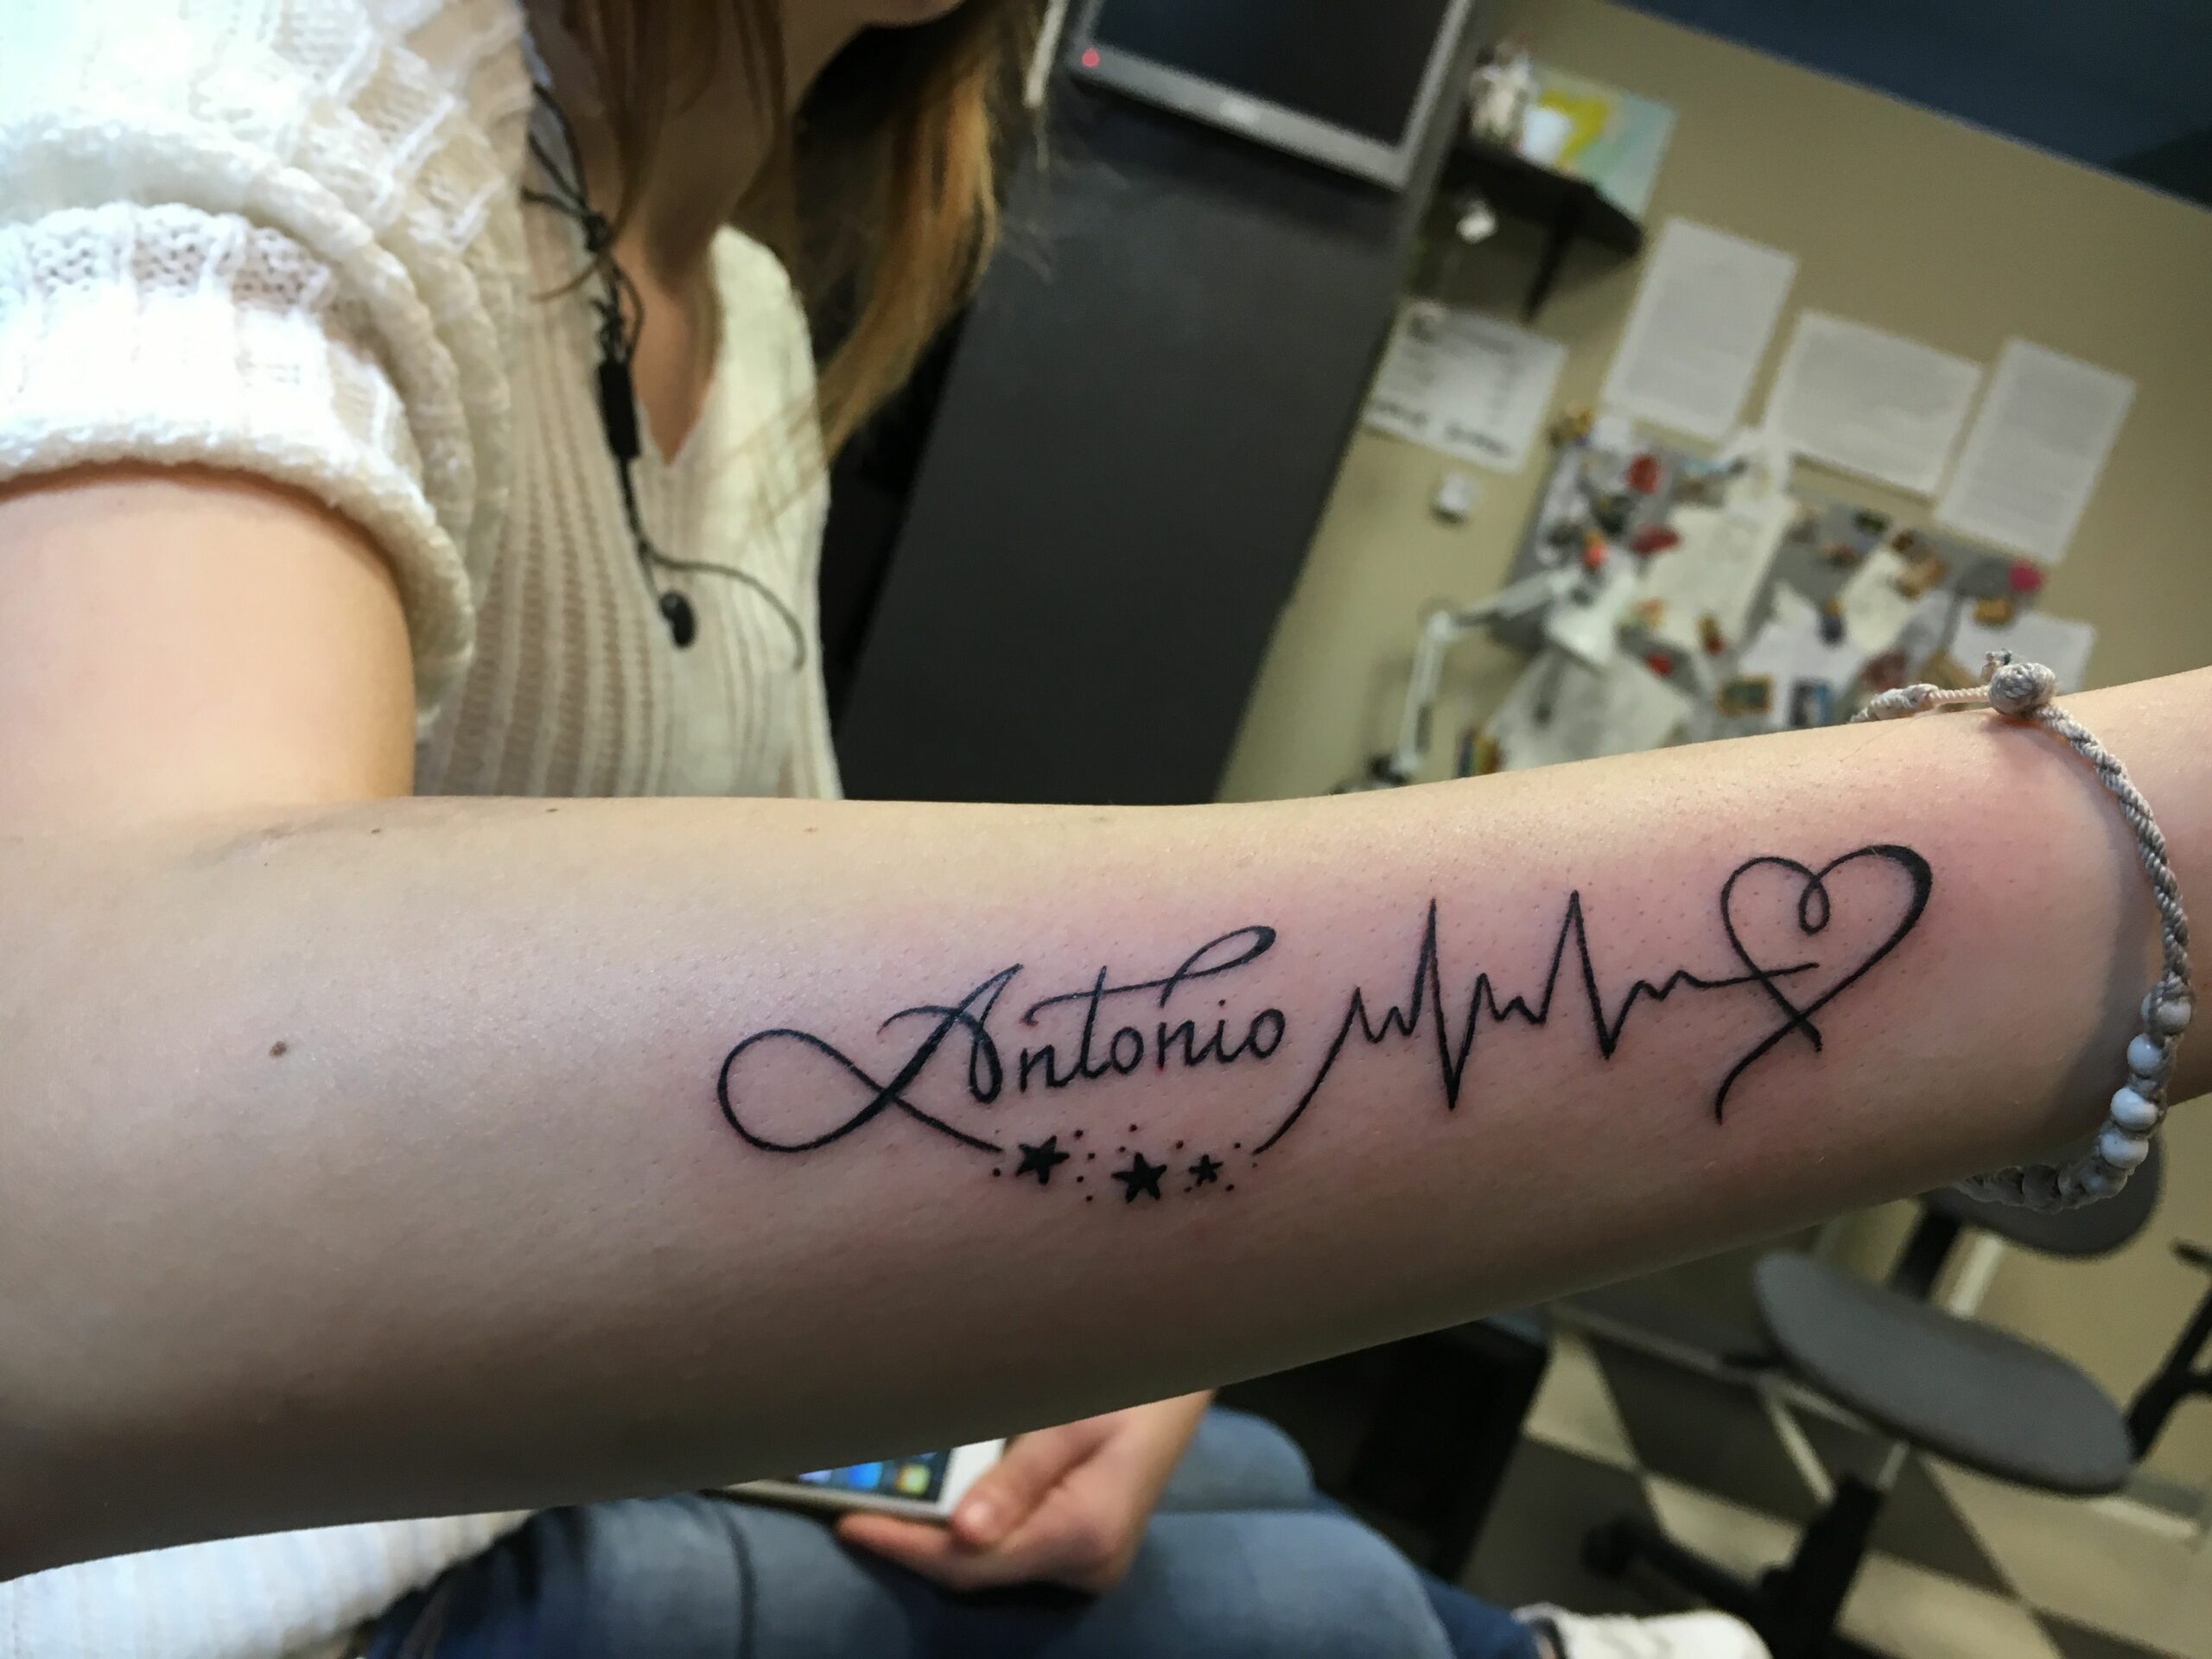 Family Tattoo Design  Small Heart Tattoo  Heartbeat Tattoo  Family Tattoo  Design  Small Heart Tattoo  Heartbeat Tattoo   Subscribe to my youtube  channel   Ansh Ink Tattoos   family  By Ansh Ink Tattoos   Facebook